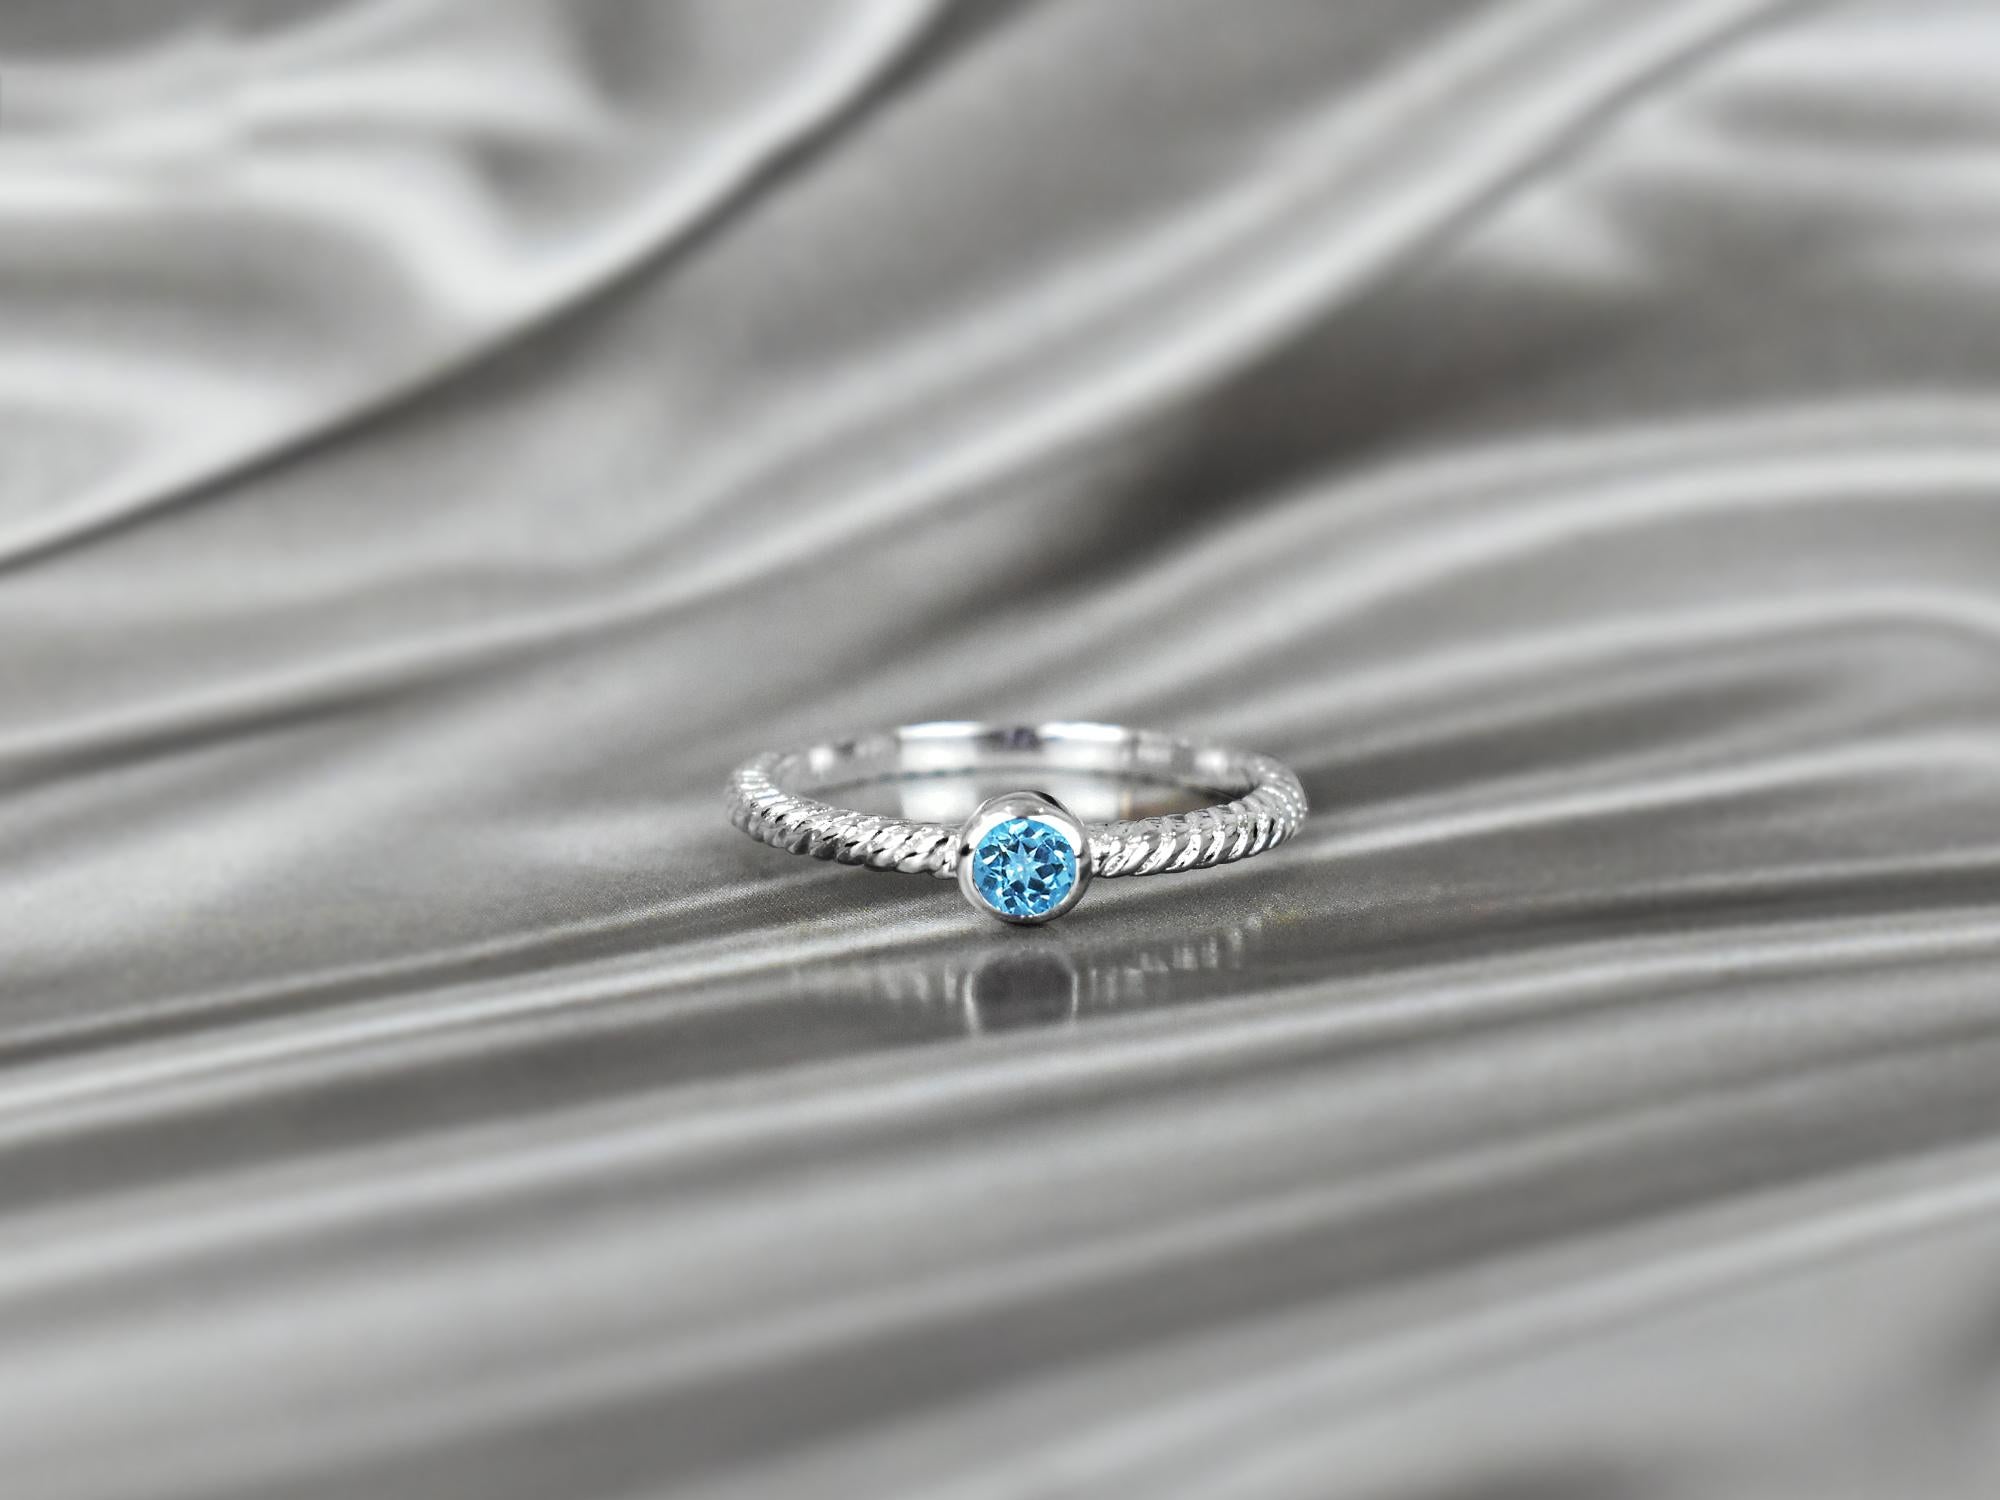 For Sale:  10k Gold Round Gemstone 3.5mm Round Gemstone Ring Birthstone Ring Stackable Ring 8